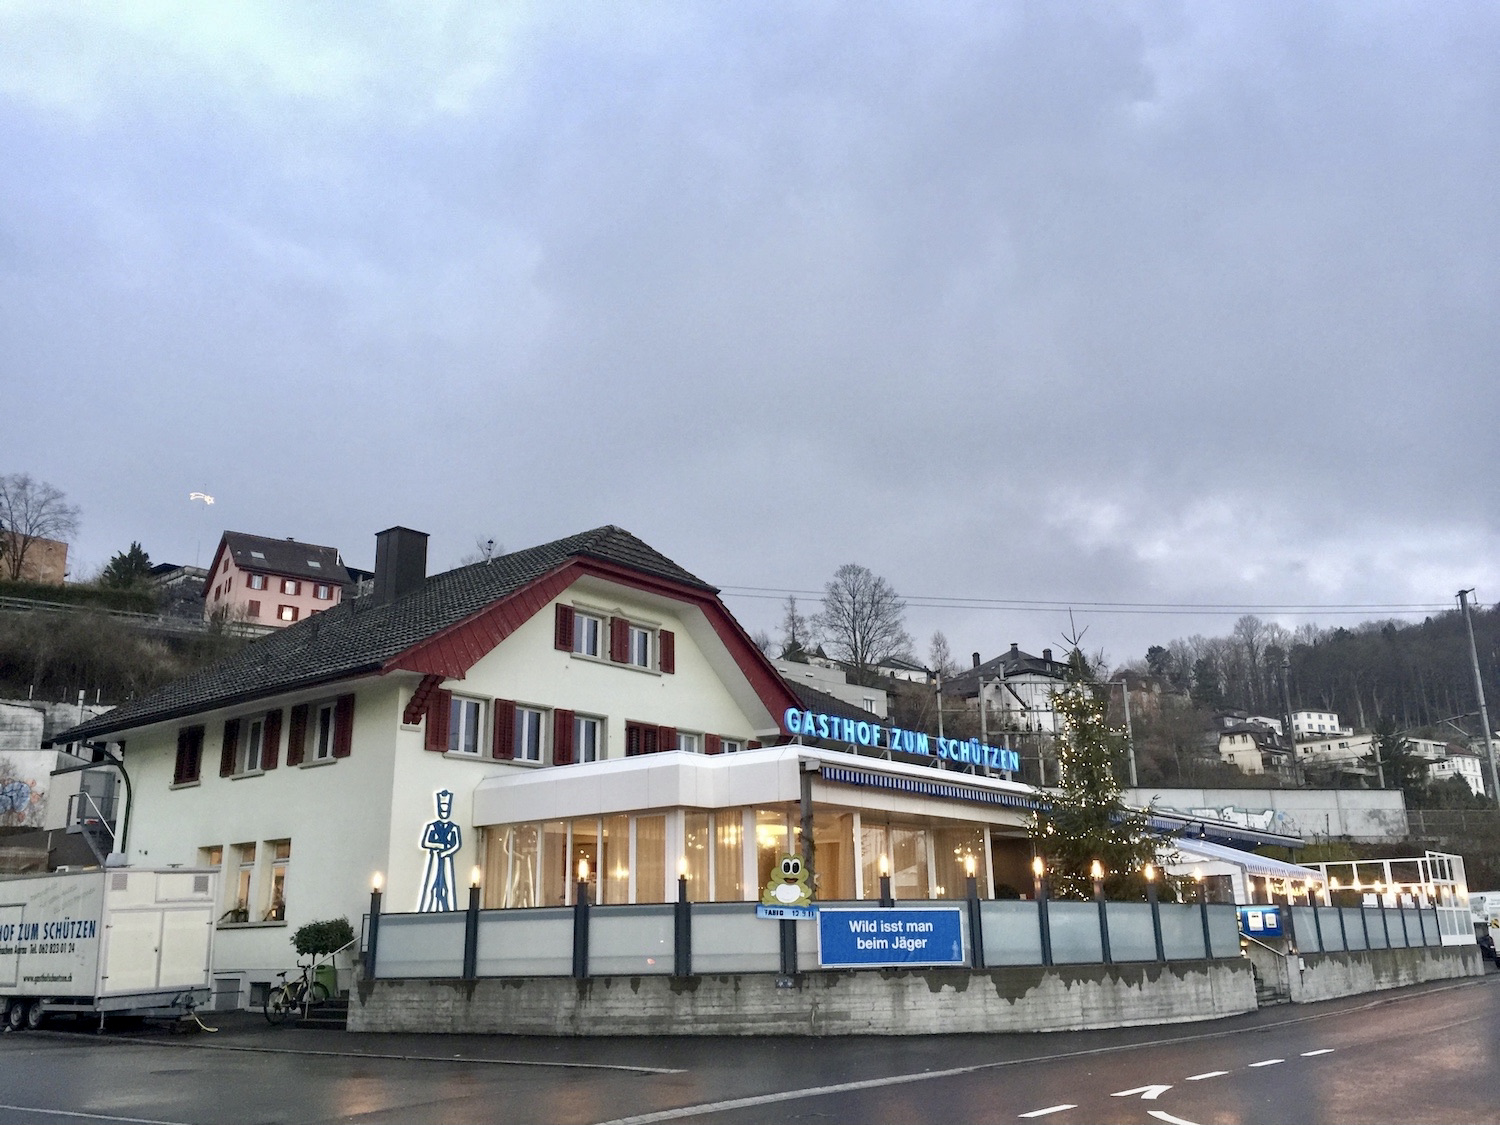 Restaurant zum Schuetzen Aarau, Switzerland